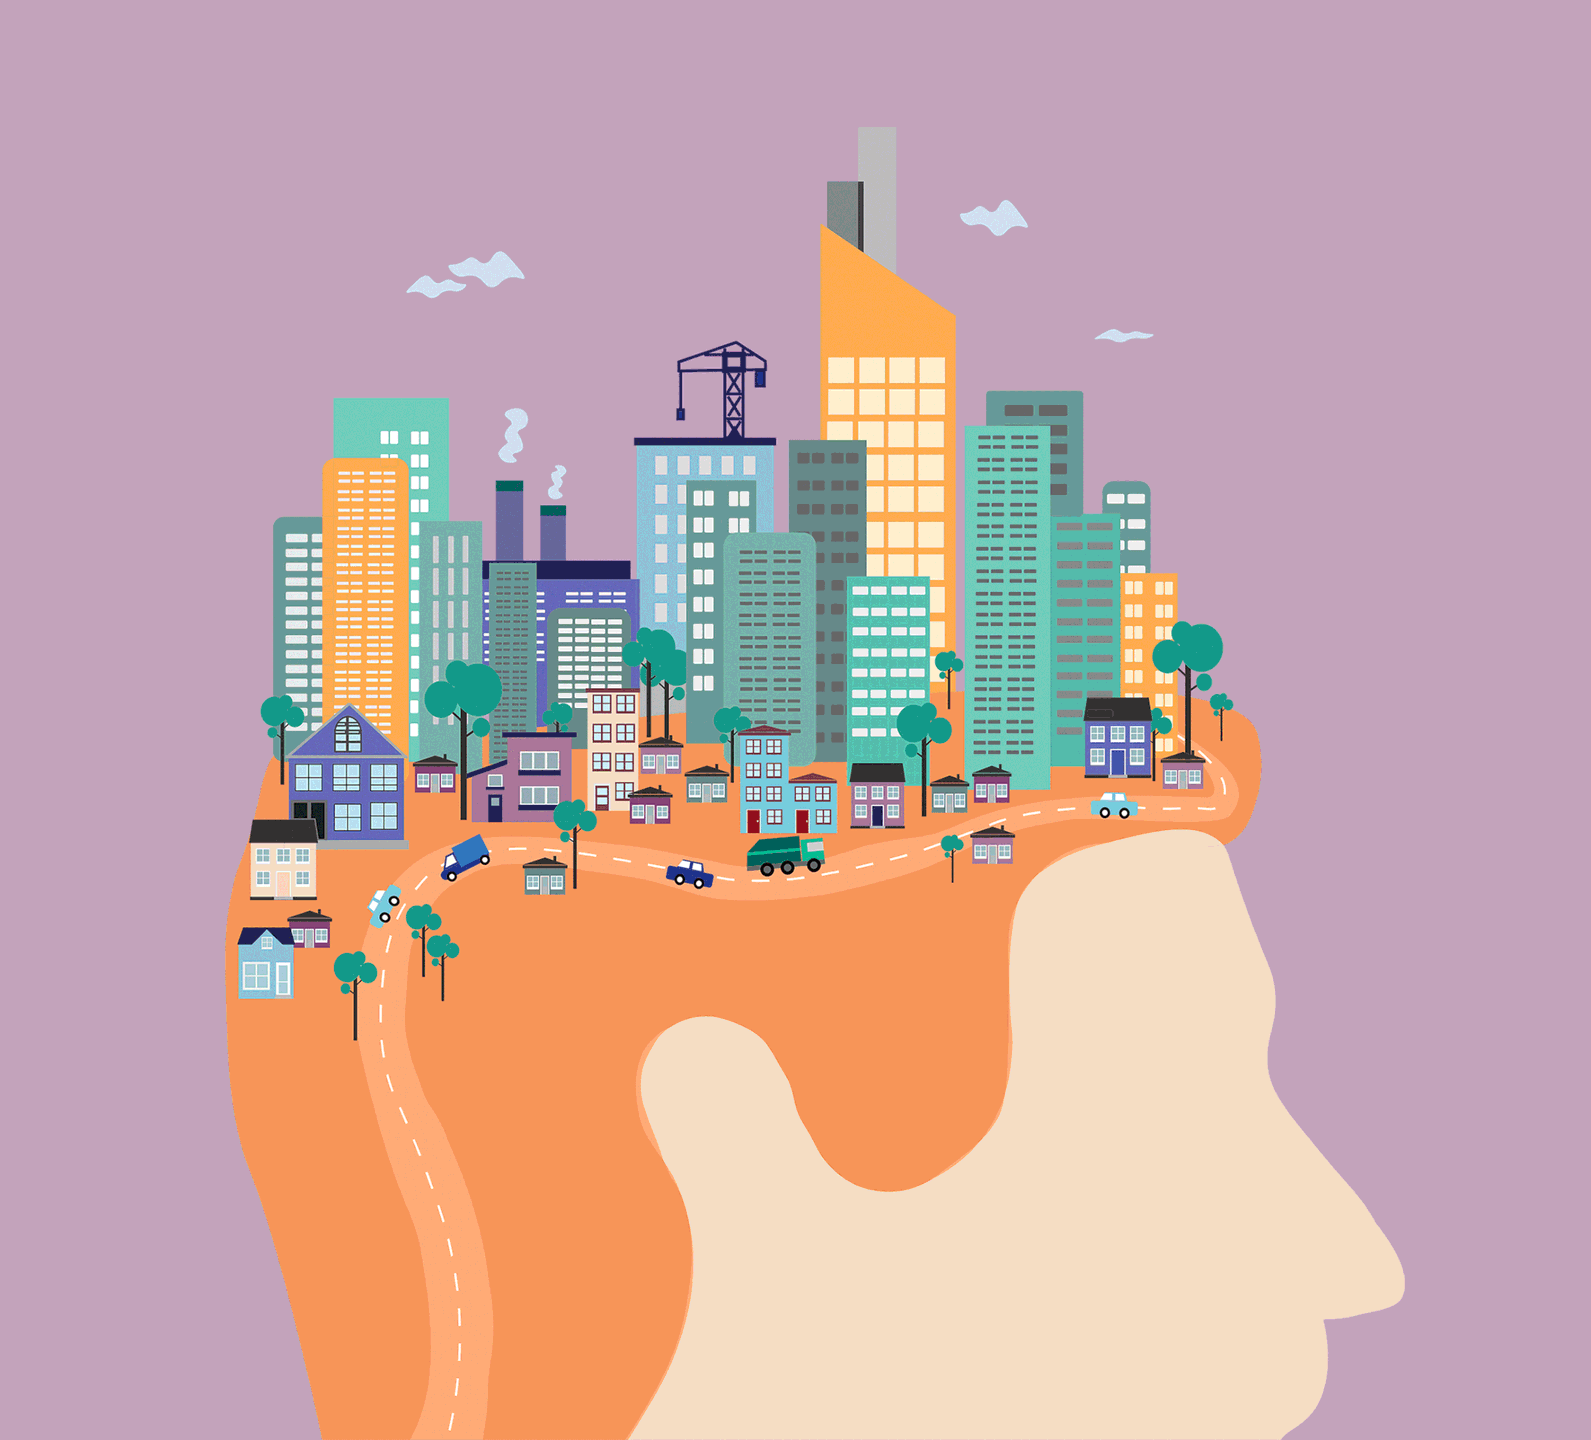 City Brain: A New Model of Urban Governance Catalyzed by Big Data